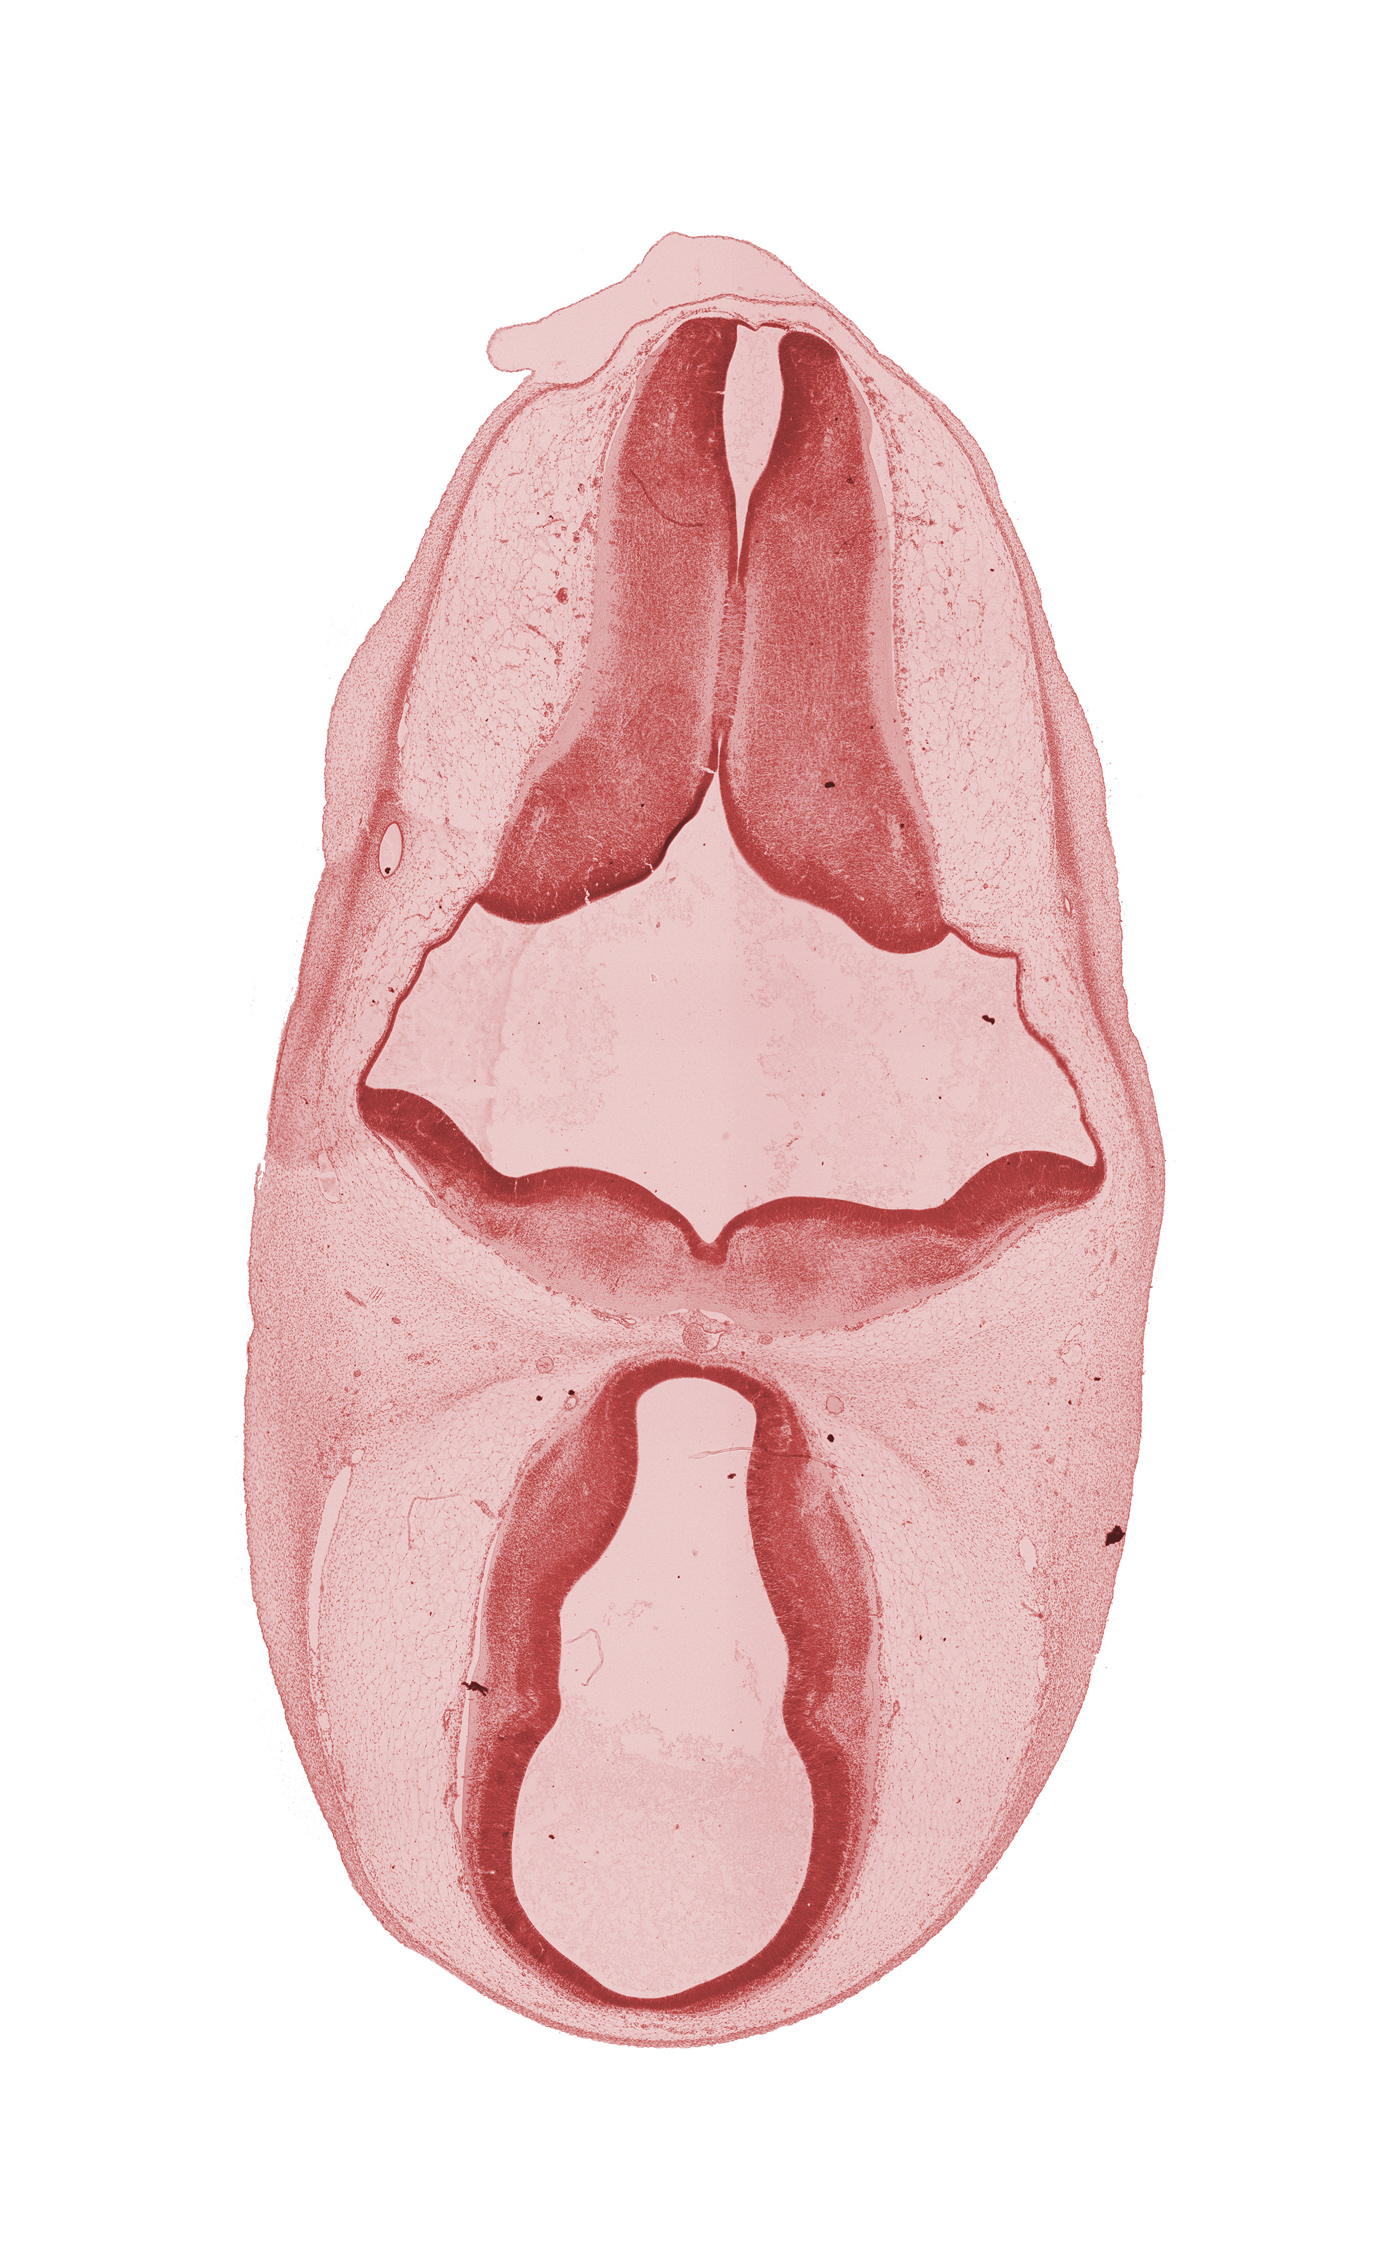 dorsal sulcus, dorsal thalamus, endolymphatic duct, epithalamus, hypothalamus, marginal ridge, osteogenic layer, rhombencoel (fourth ventricle), subarachnoid space, third ventricle, ventral thalamus